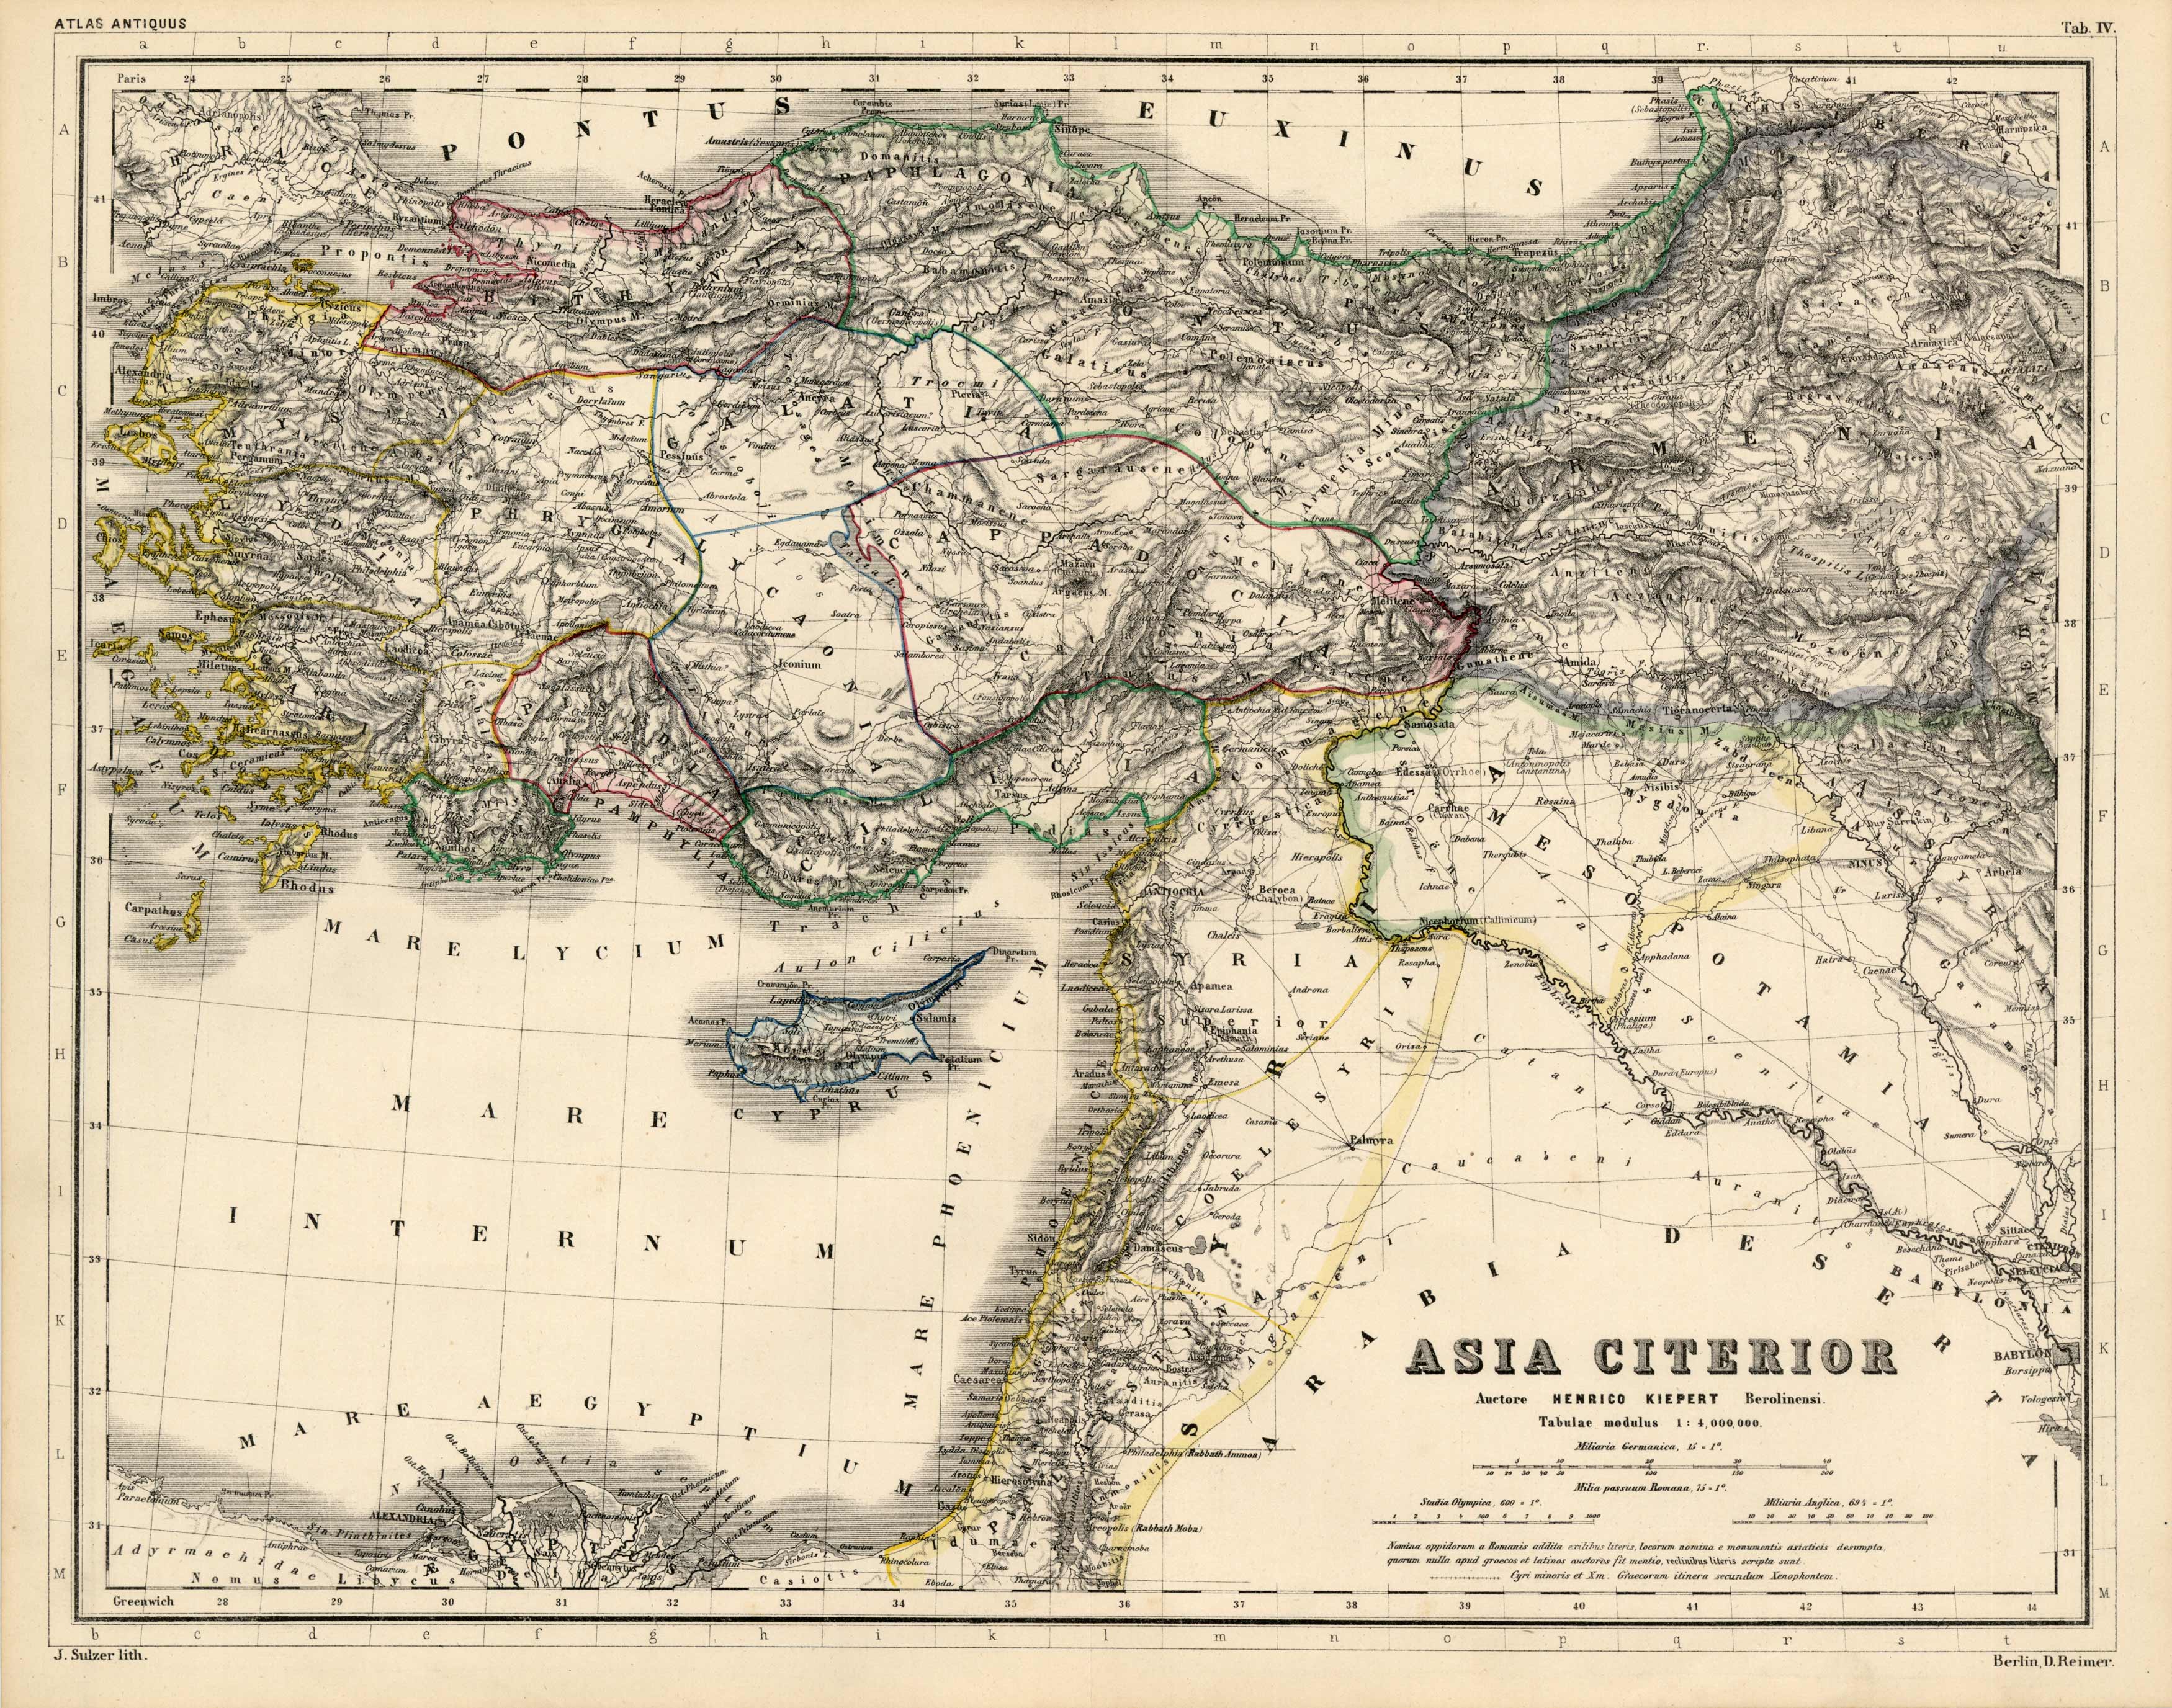 Asia Citerior (Eastern Mediterranean)